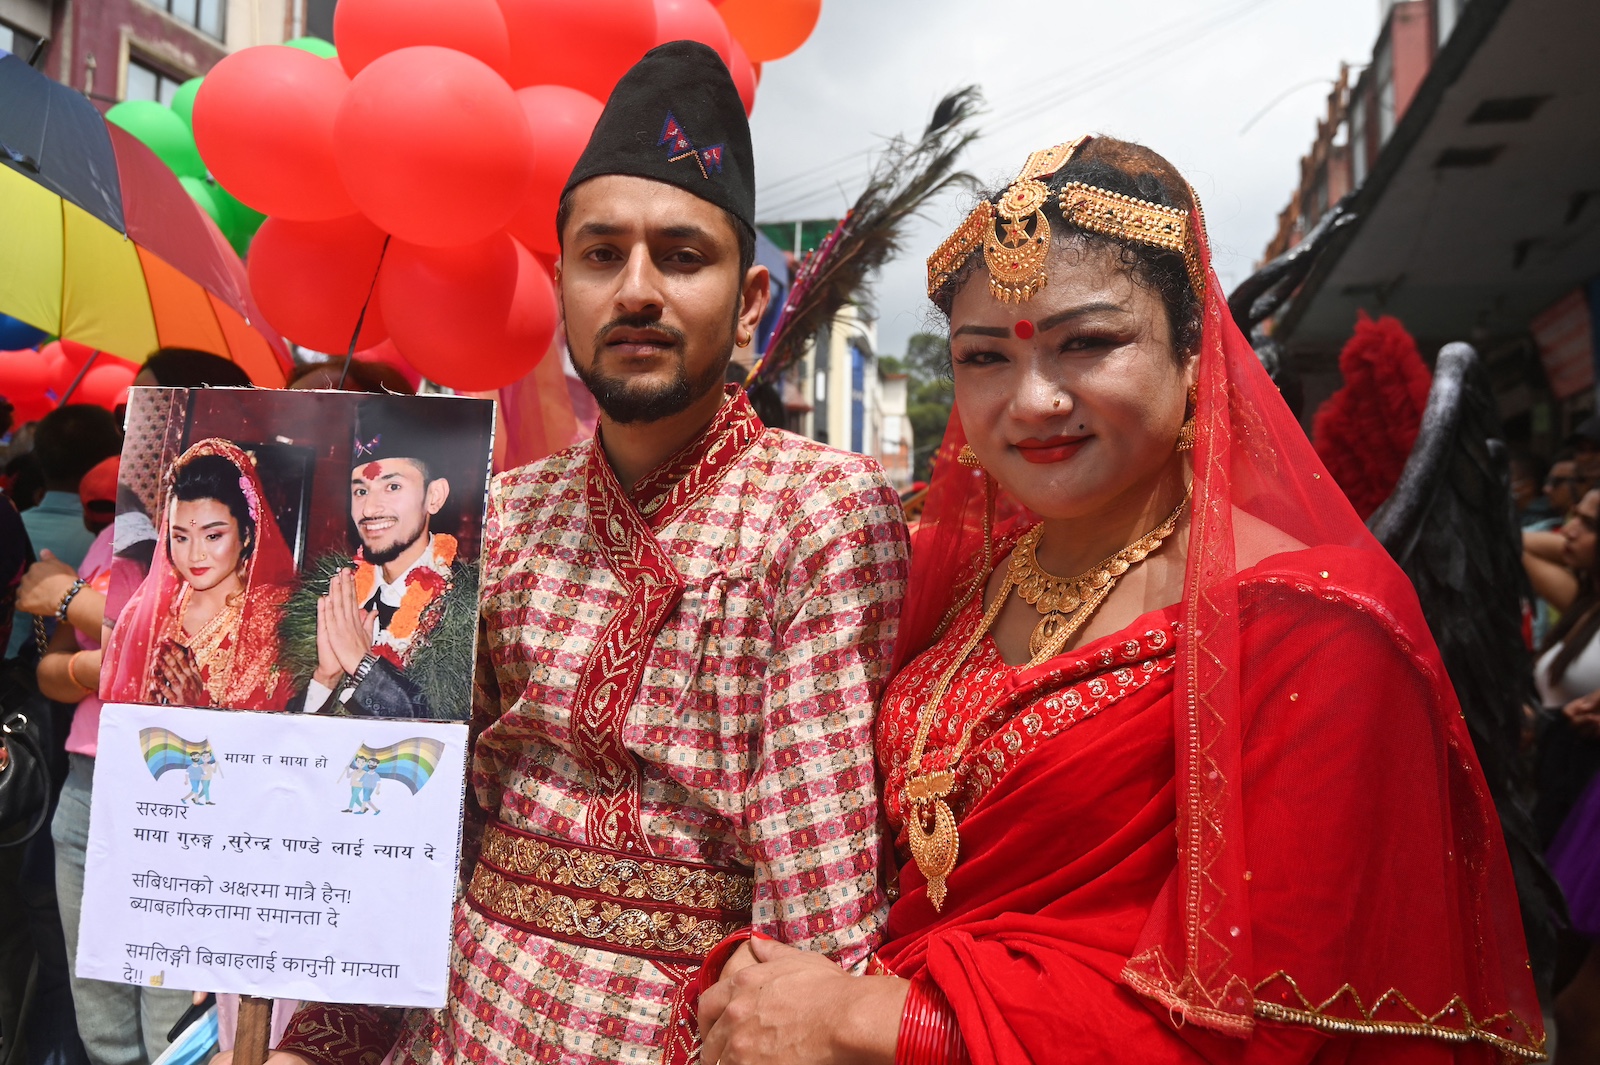 Nepal same sex couple Maya Gurung and Surendra Panday